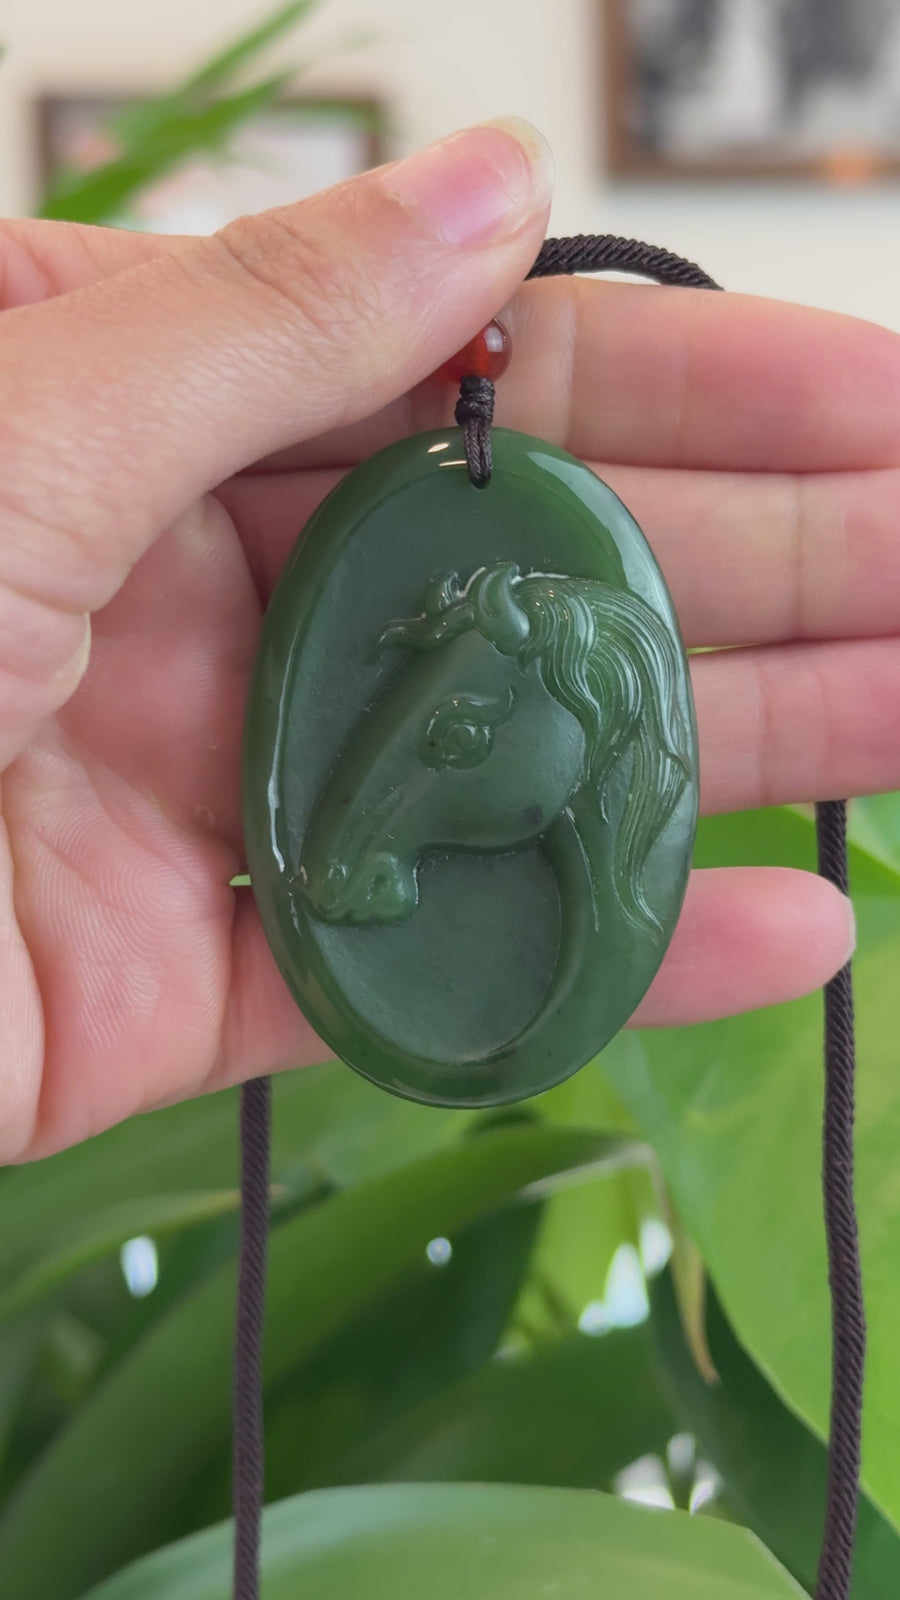 Natural Jade 12 Zodiac: Nephrite Jade Horse Pendant Necklace in Deep Green